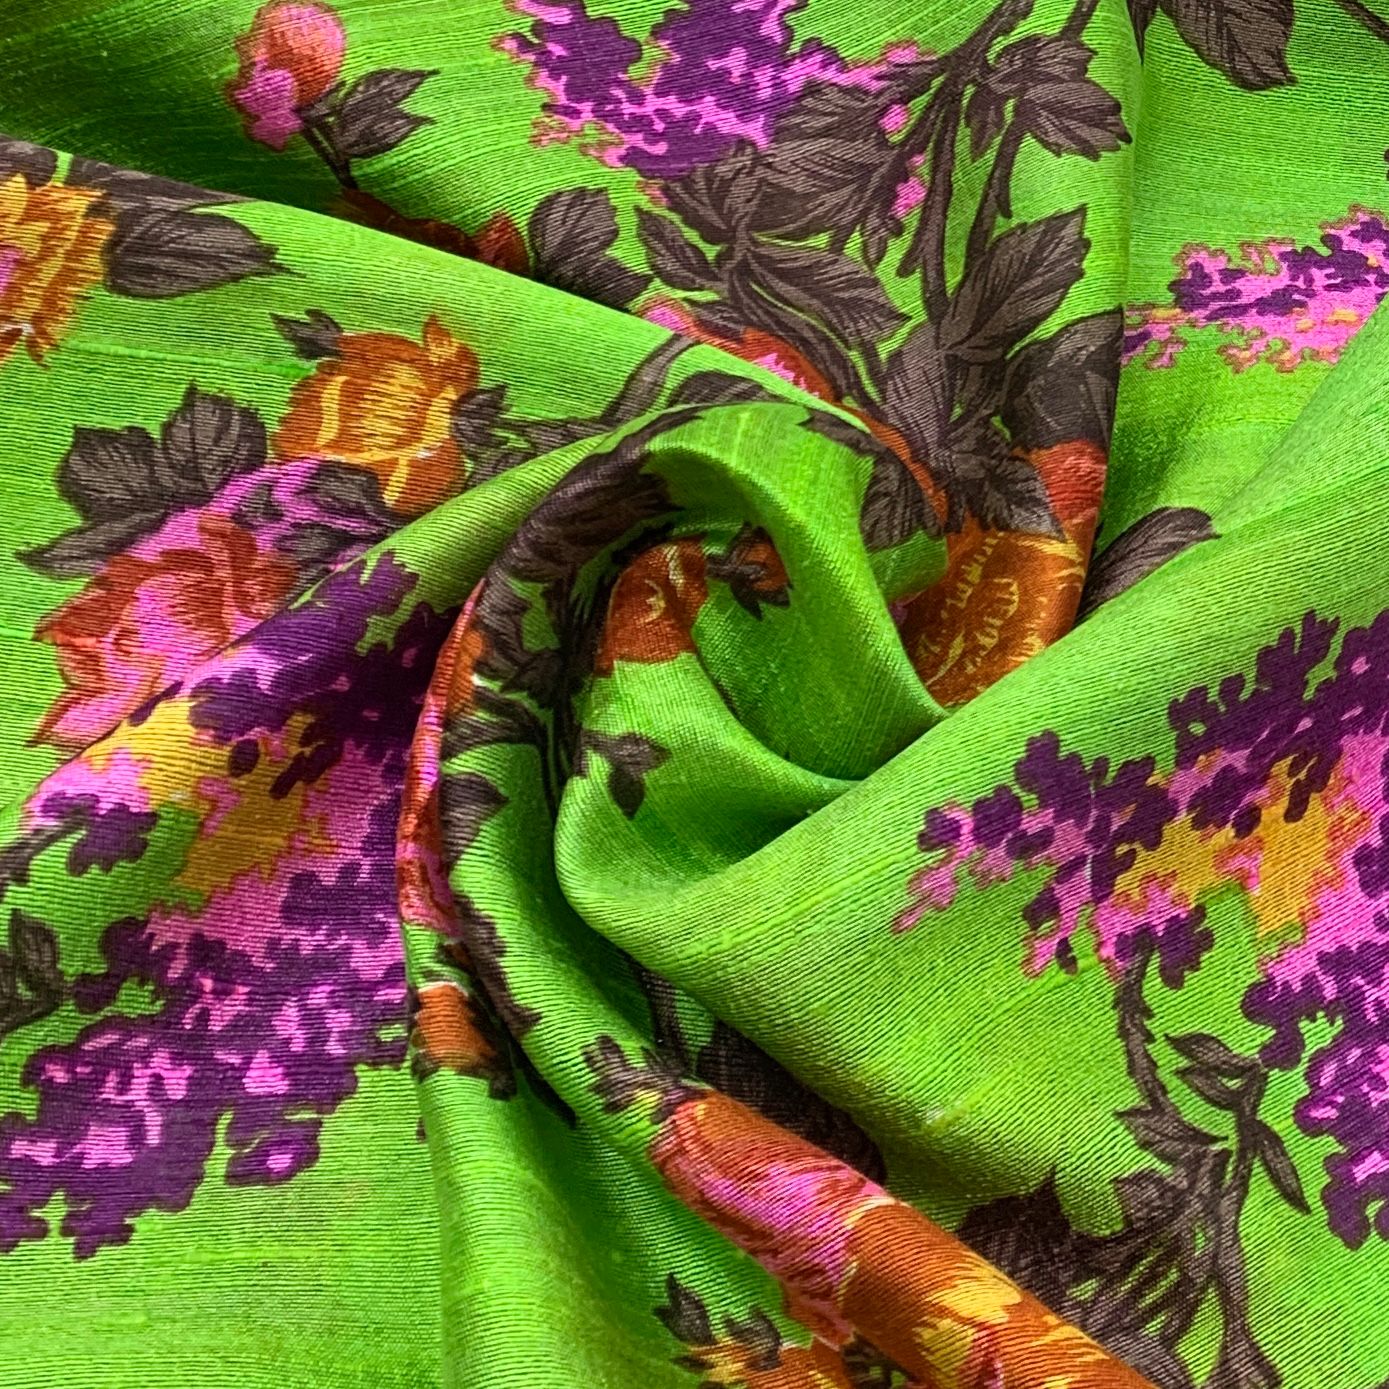 Raw Silk Printed Fabric